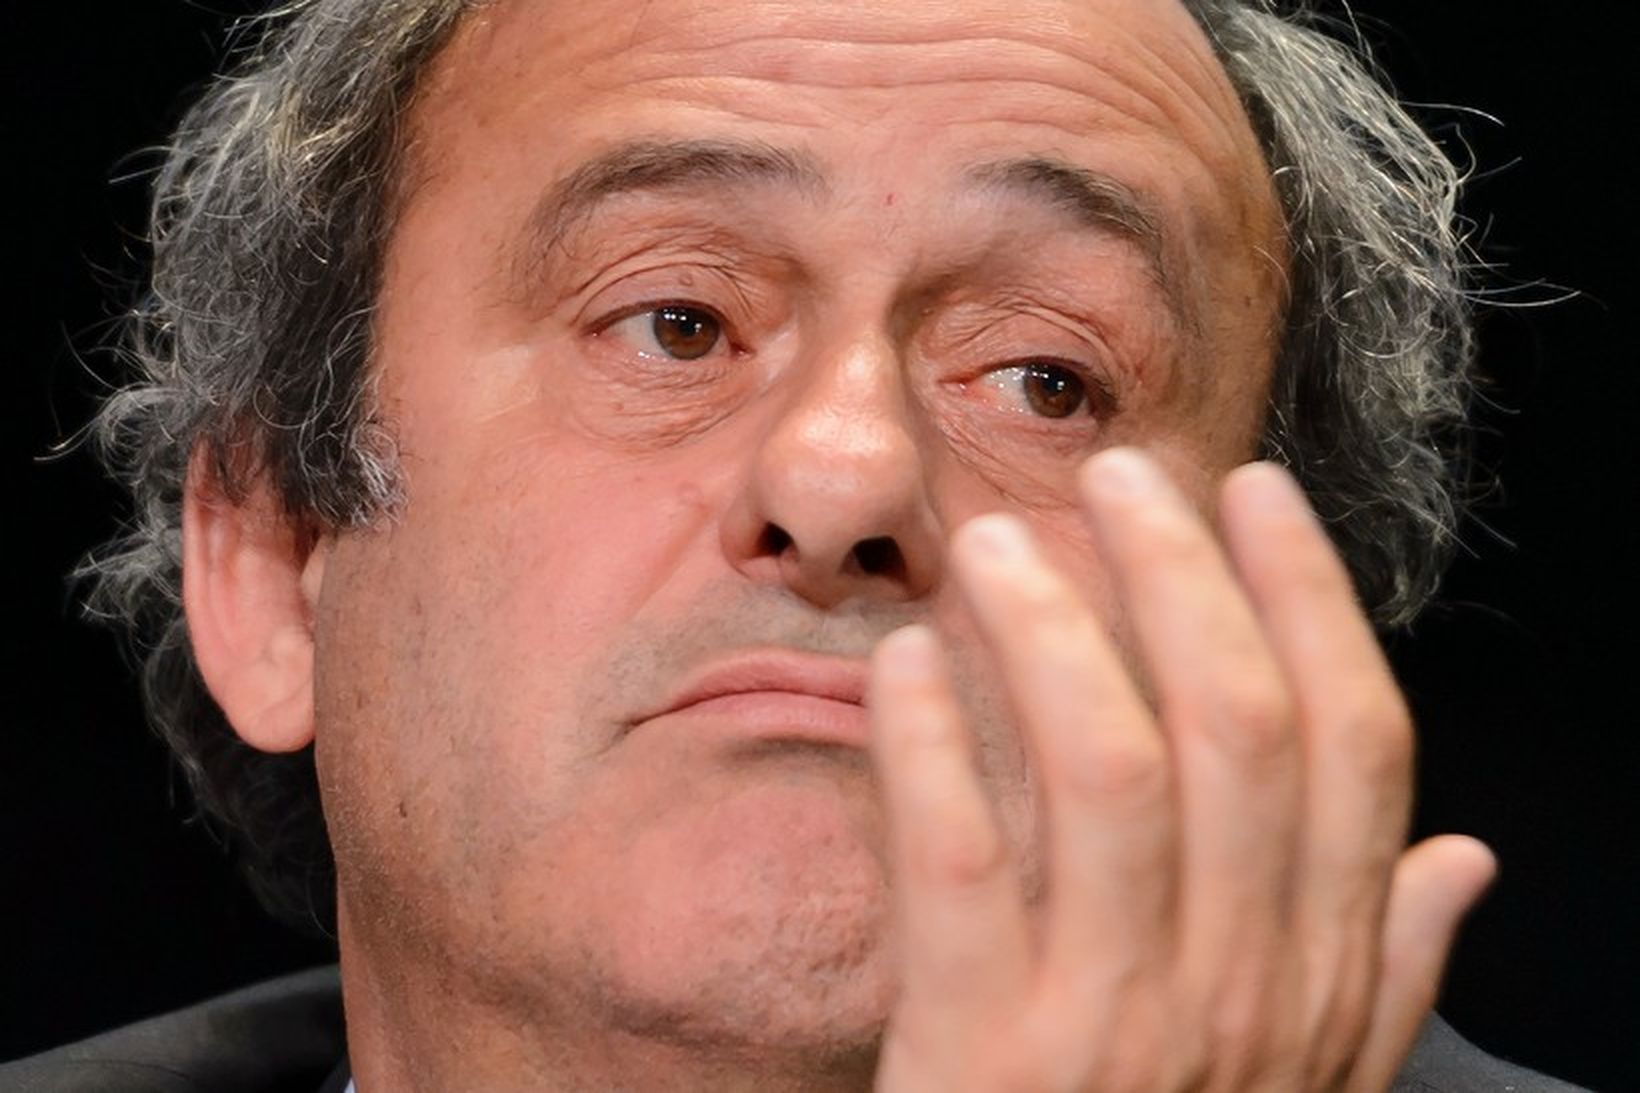 Michel Platini, forseti UEFA.